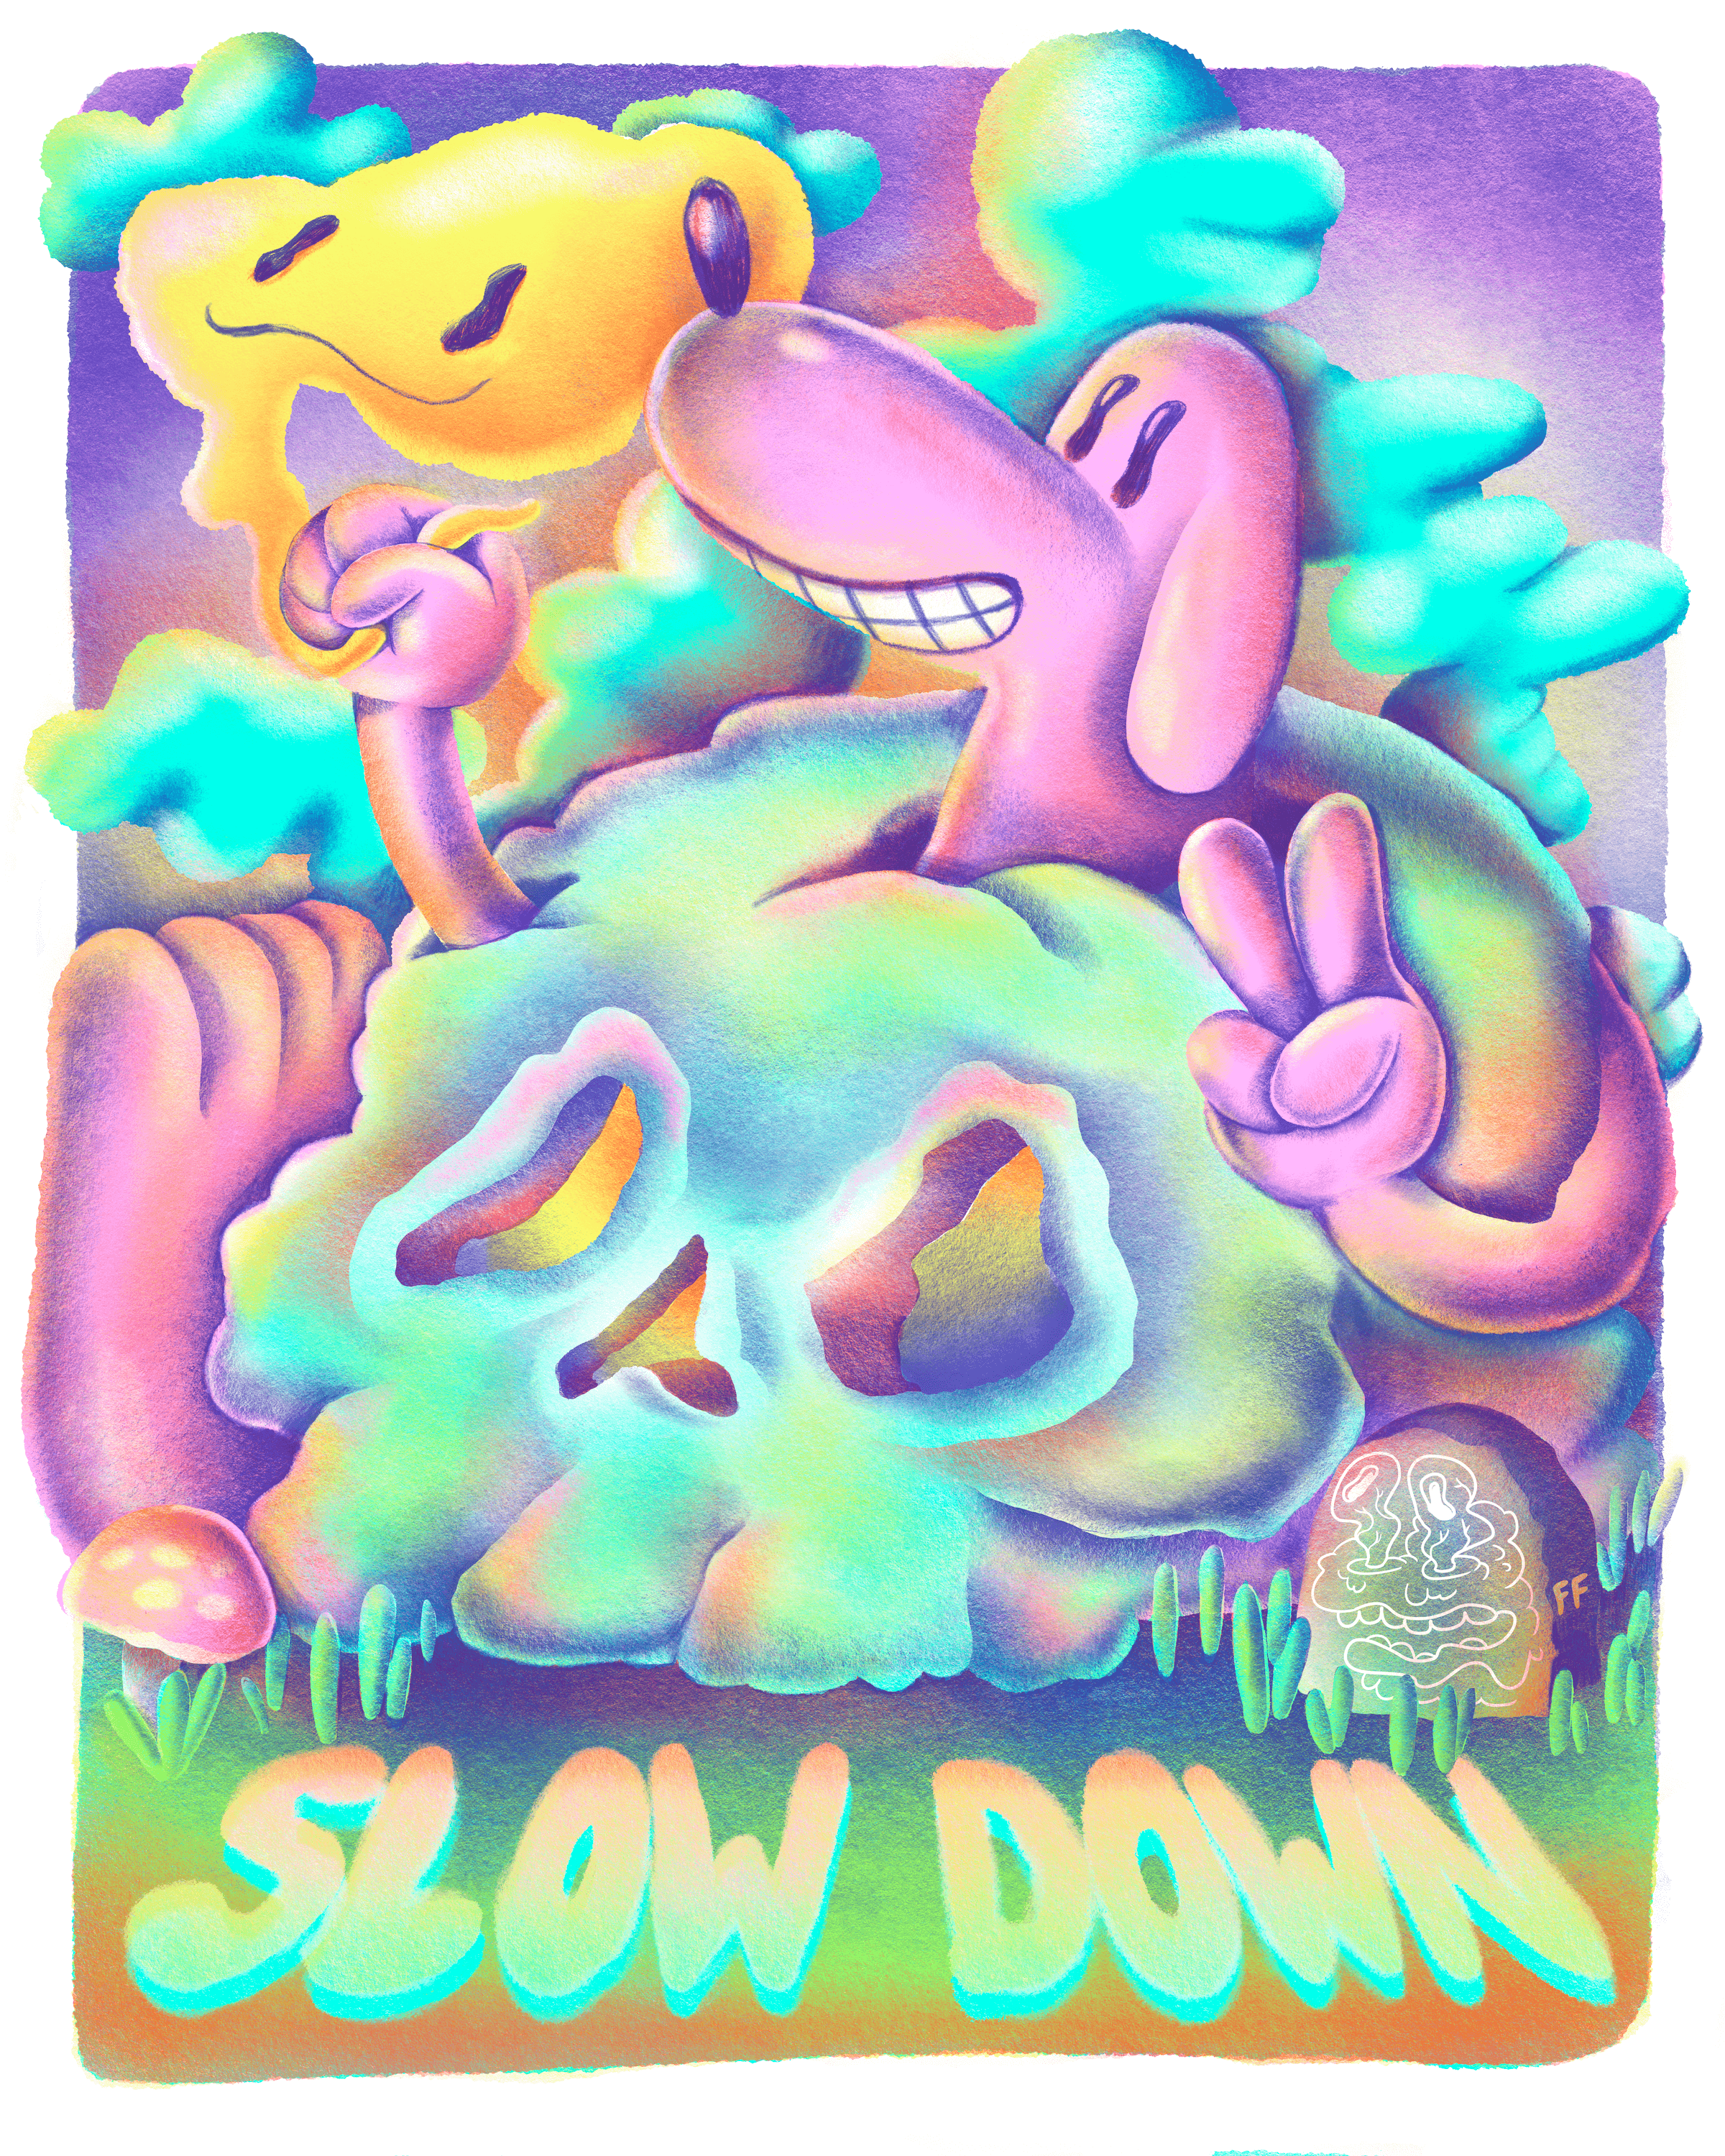 SLOW DOWN